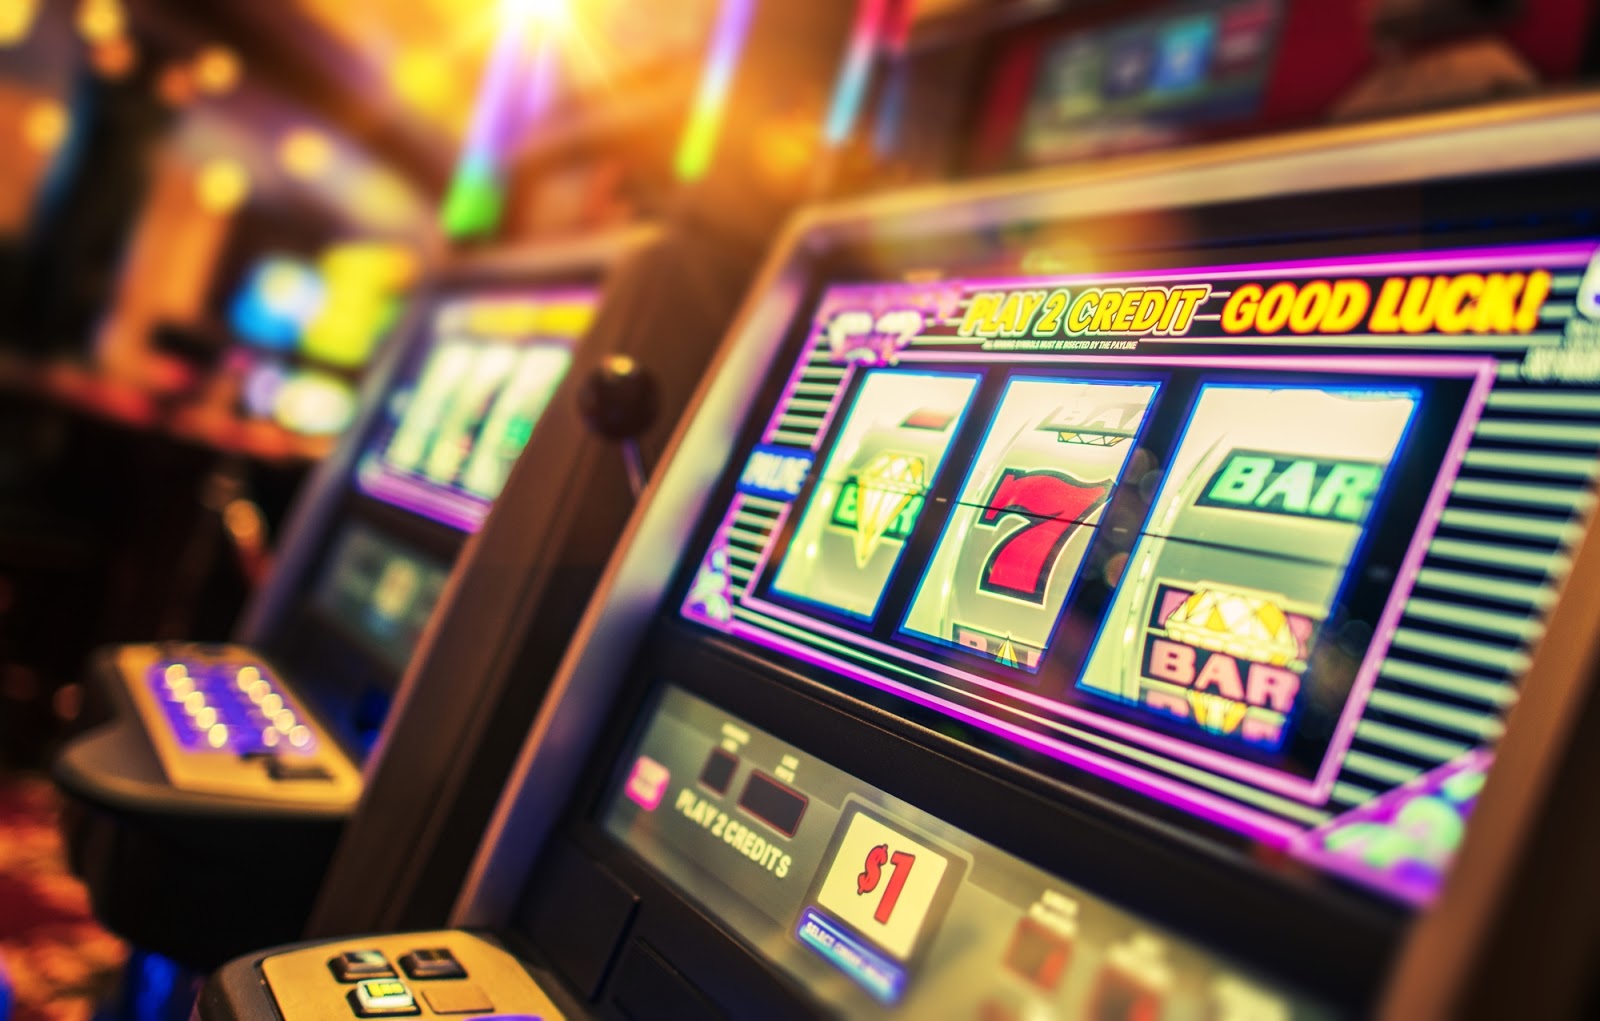 Casino Interior and Row of Classic Slot Machines. Las Vegas Gambling Theme.